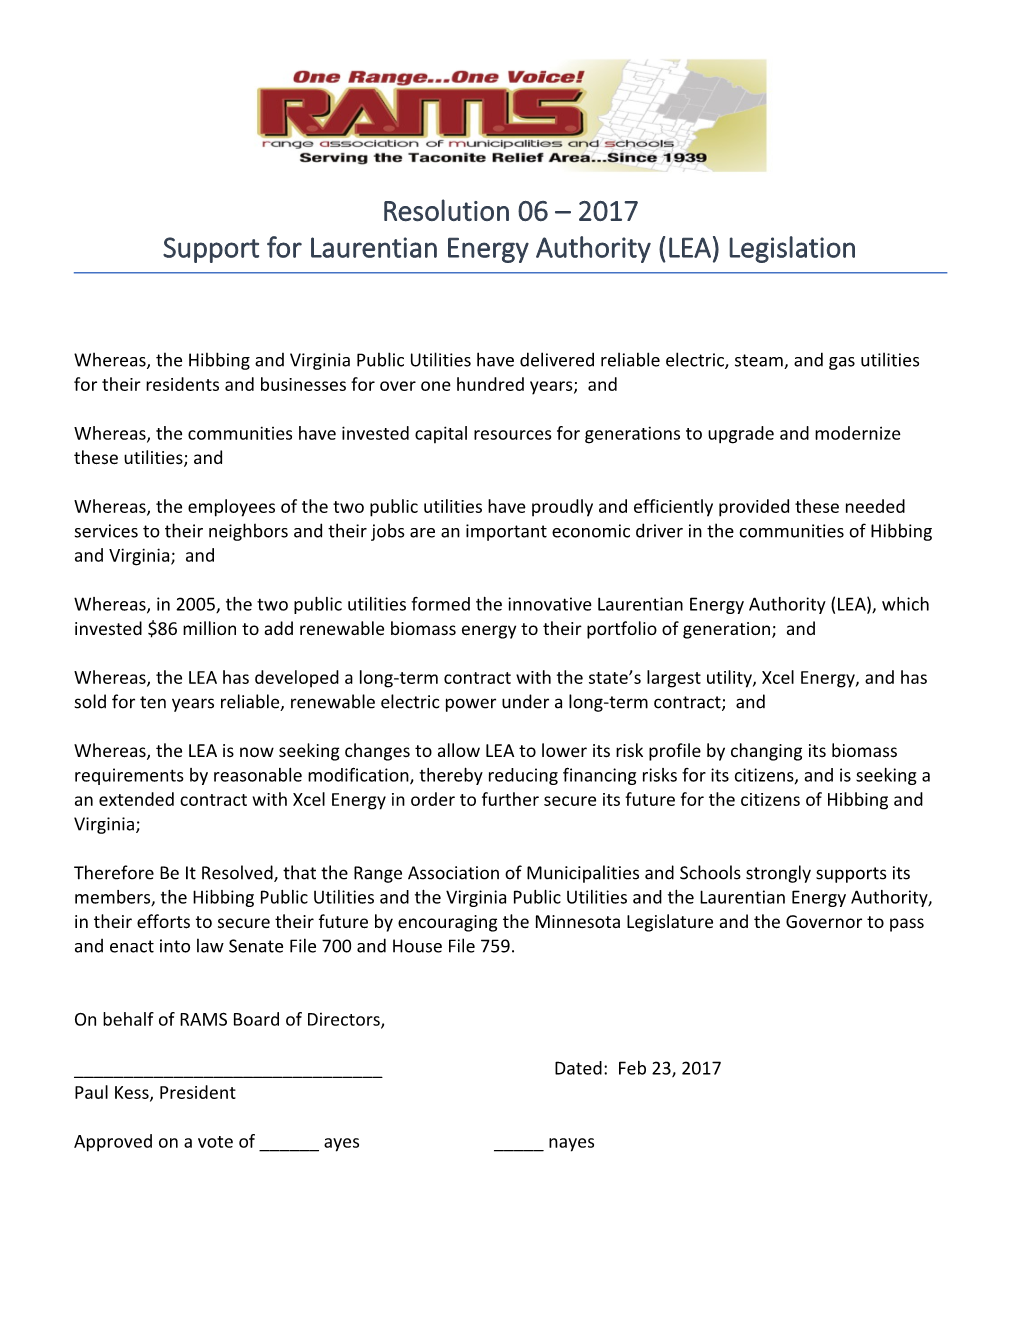 Resolution 06 2017 Support for Laurentian Energy Authority (LEA) Legislation